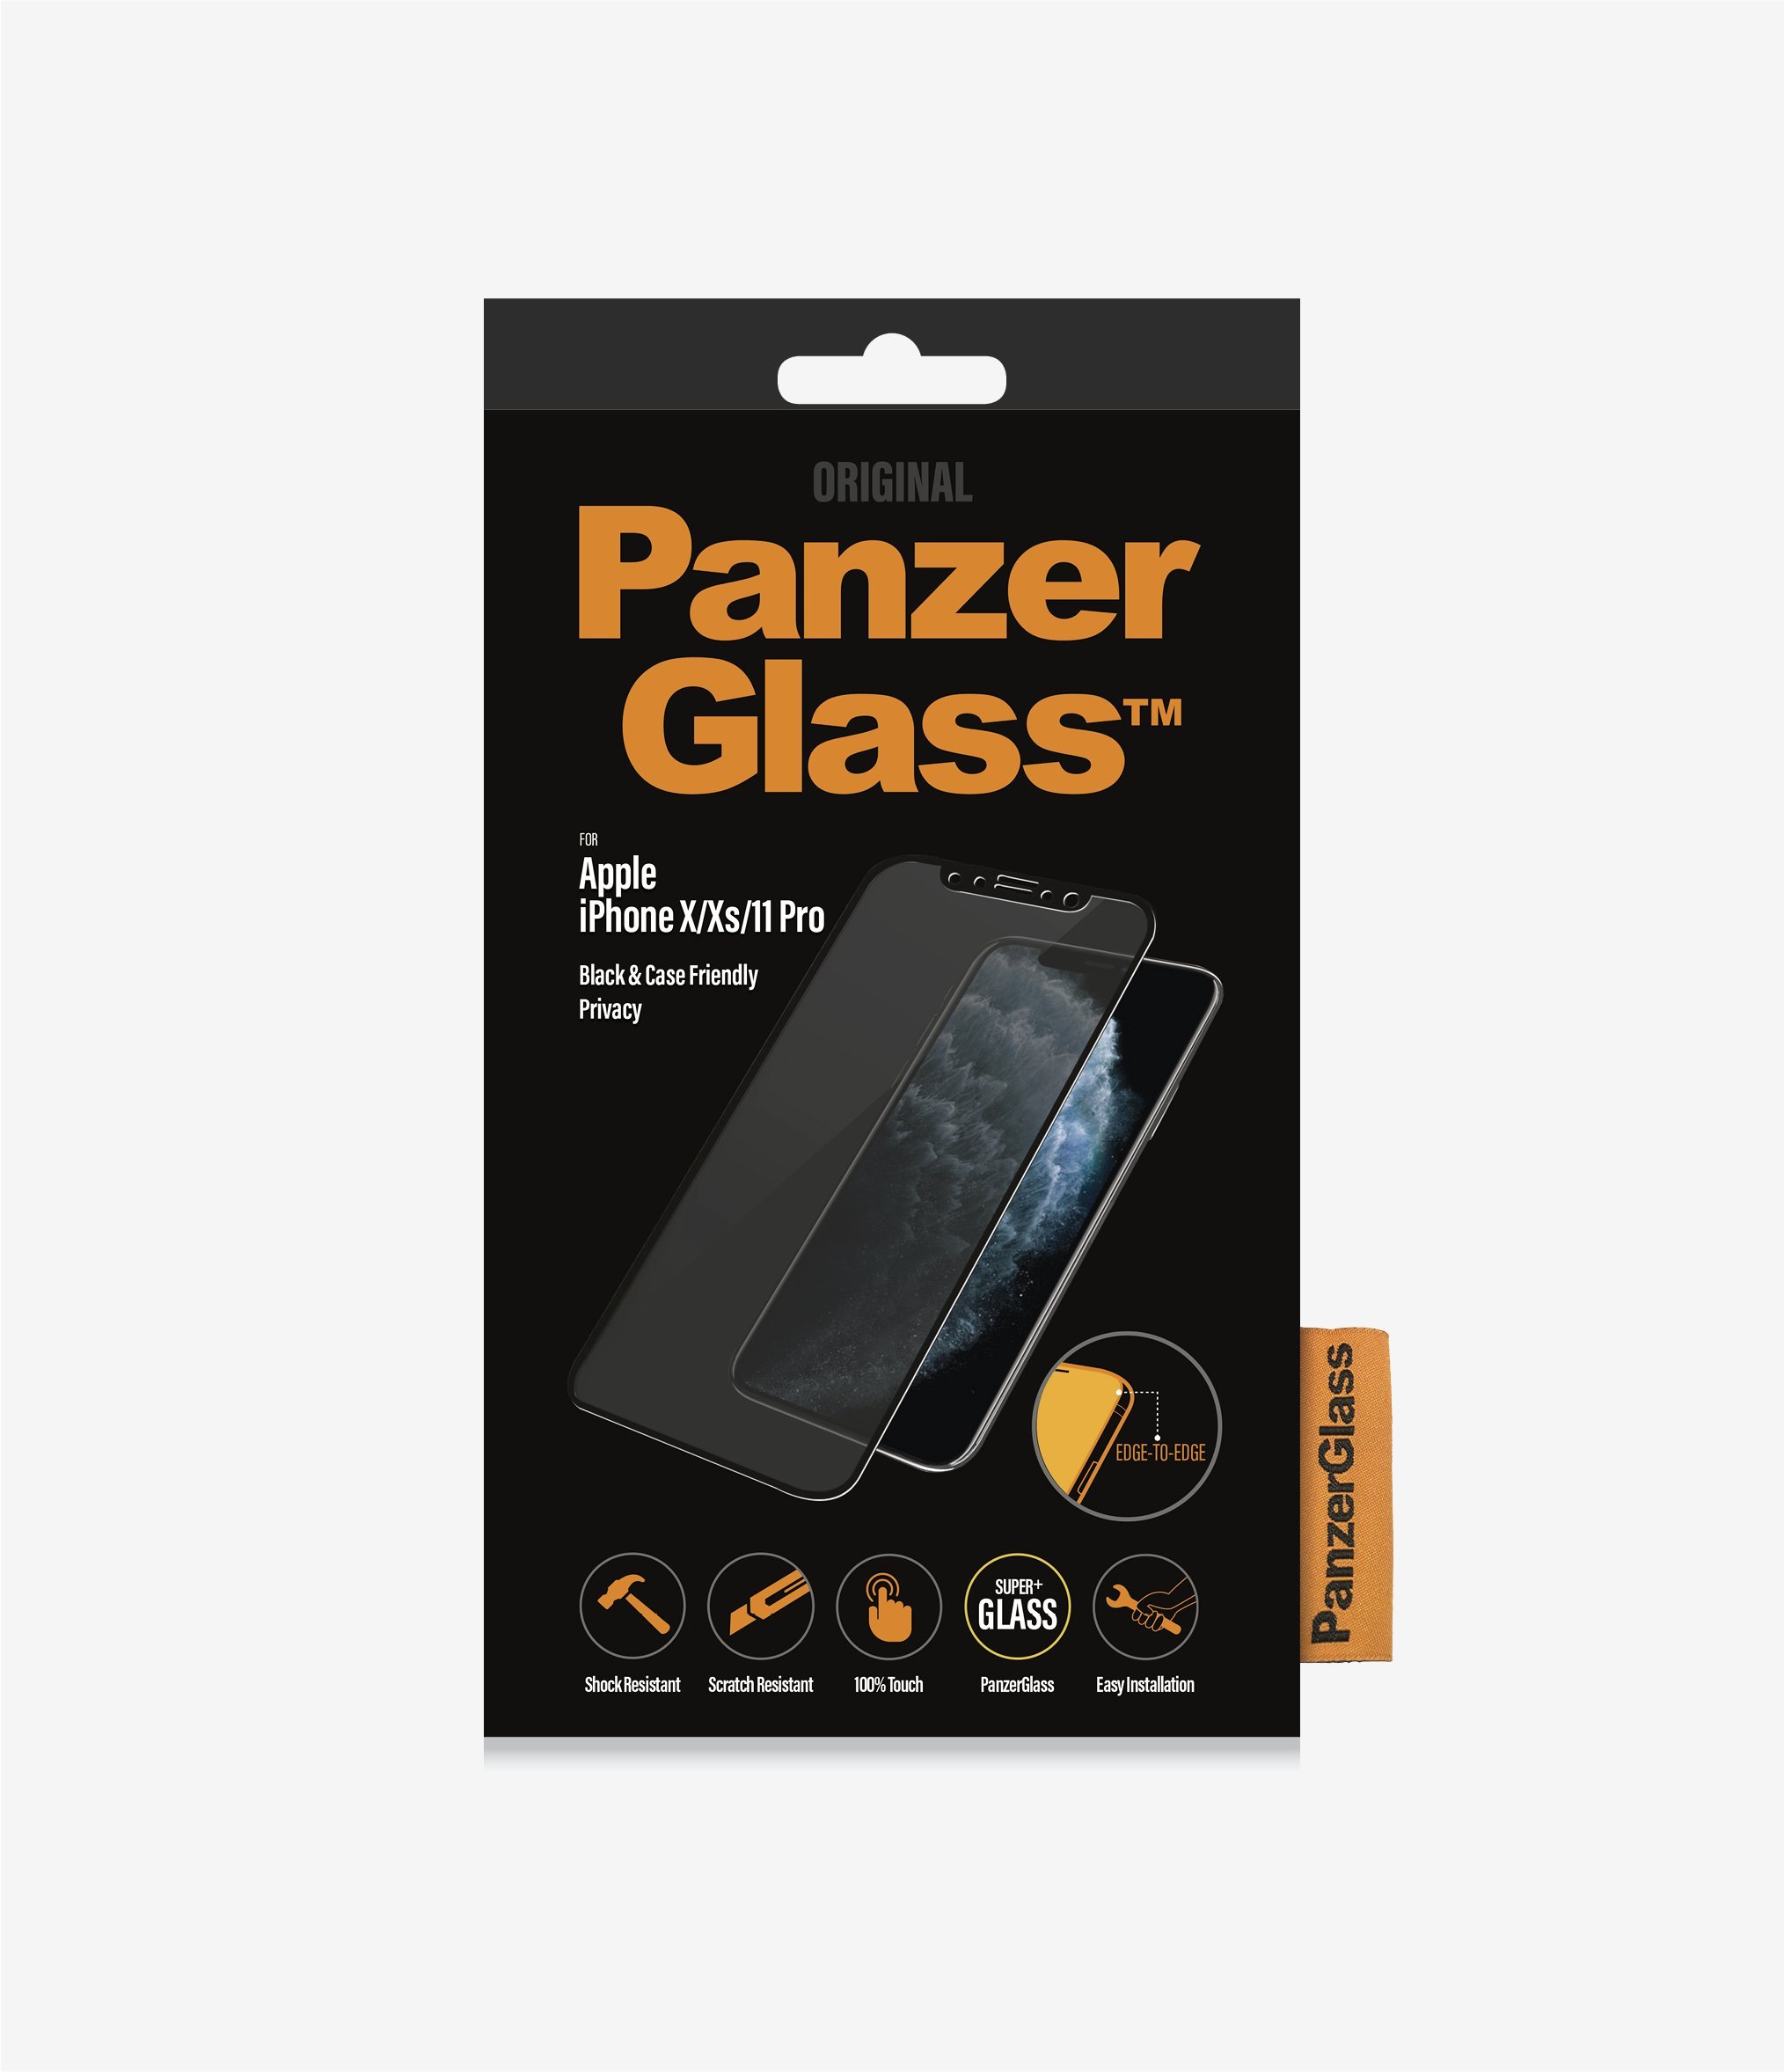 PanzerGlass™ Apple iPhone X / Xs / 11 Pro - Privacy (P2664) - Screen Protector - Anti-glare coating, Blue light reduction, Original PanzerGlass™